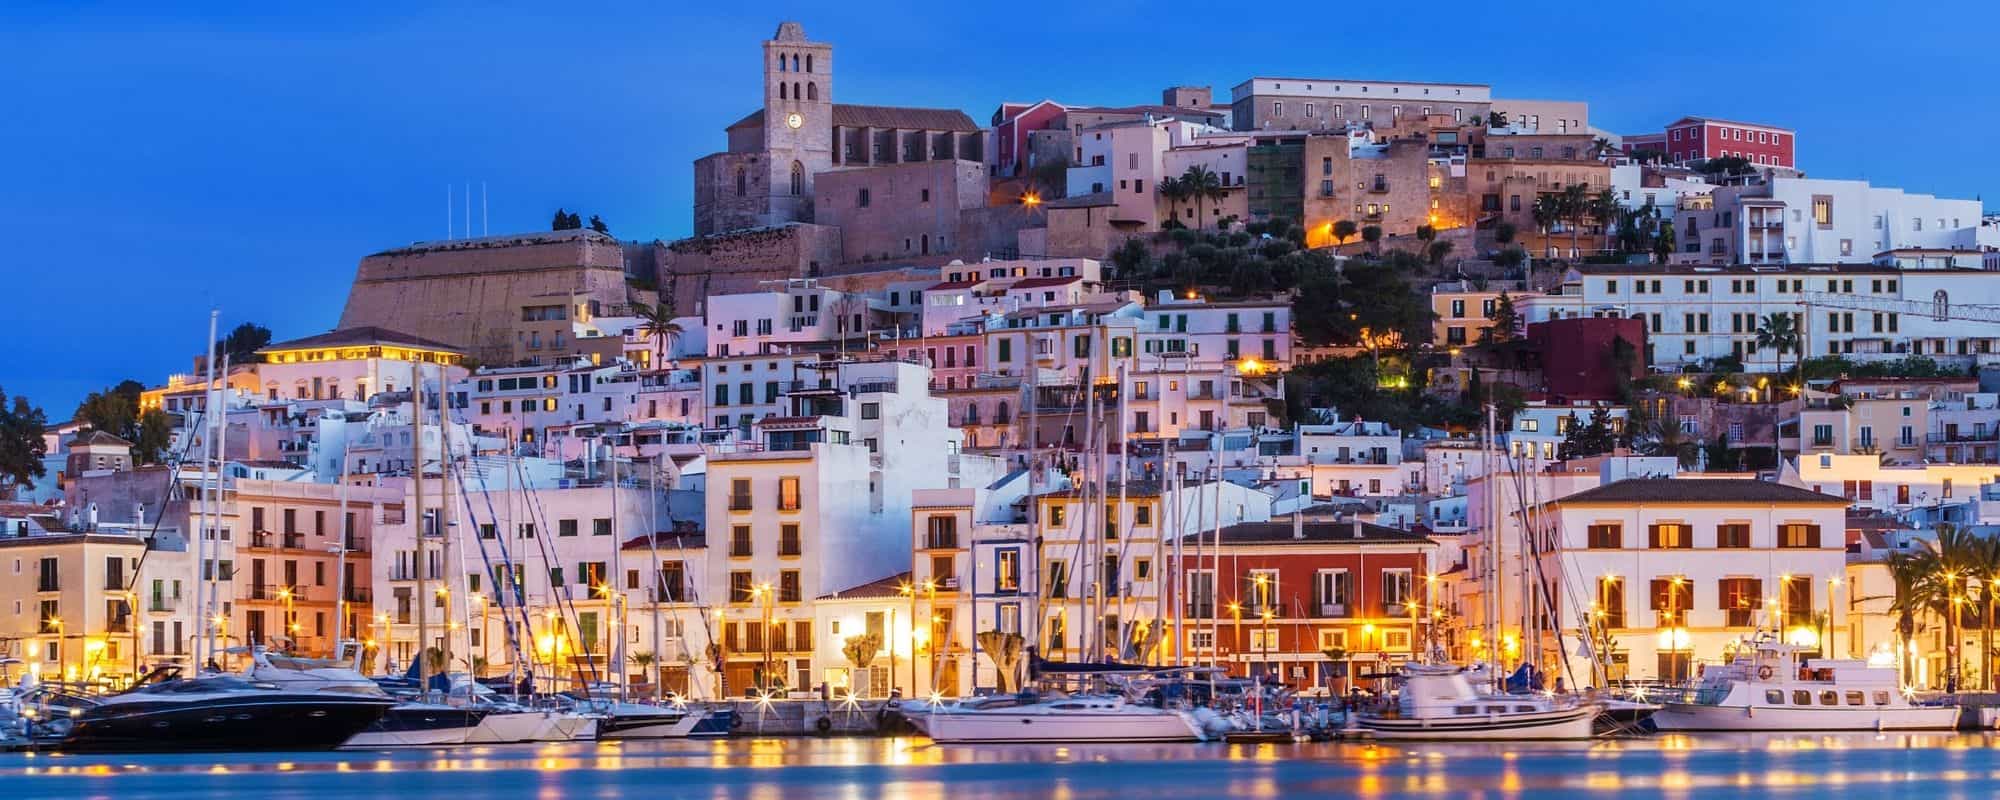 Ibiza Old Town - Spain - Balearic Islands